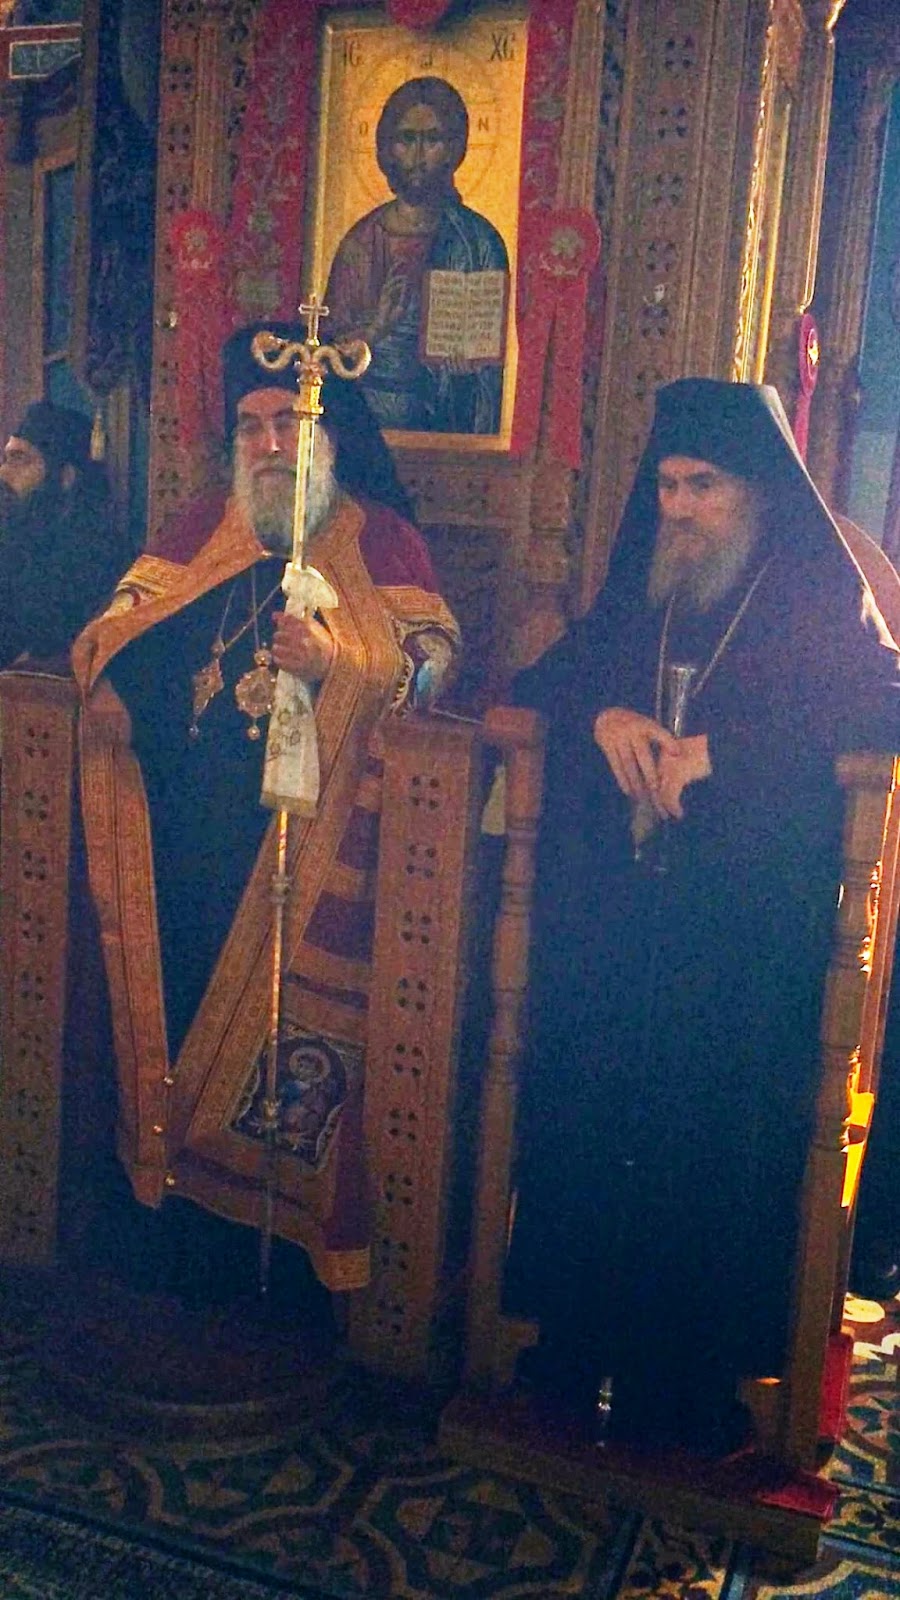 4961 - H εορτή των Αγιορειτών Πατέρων στο Ιερό Ησυχαστήριο των Δανιηλαίων (φωτογραφίες) - Φωτογραφία 3